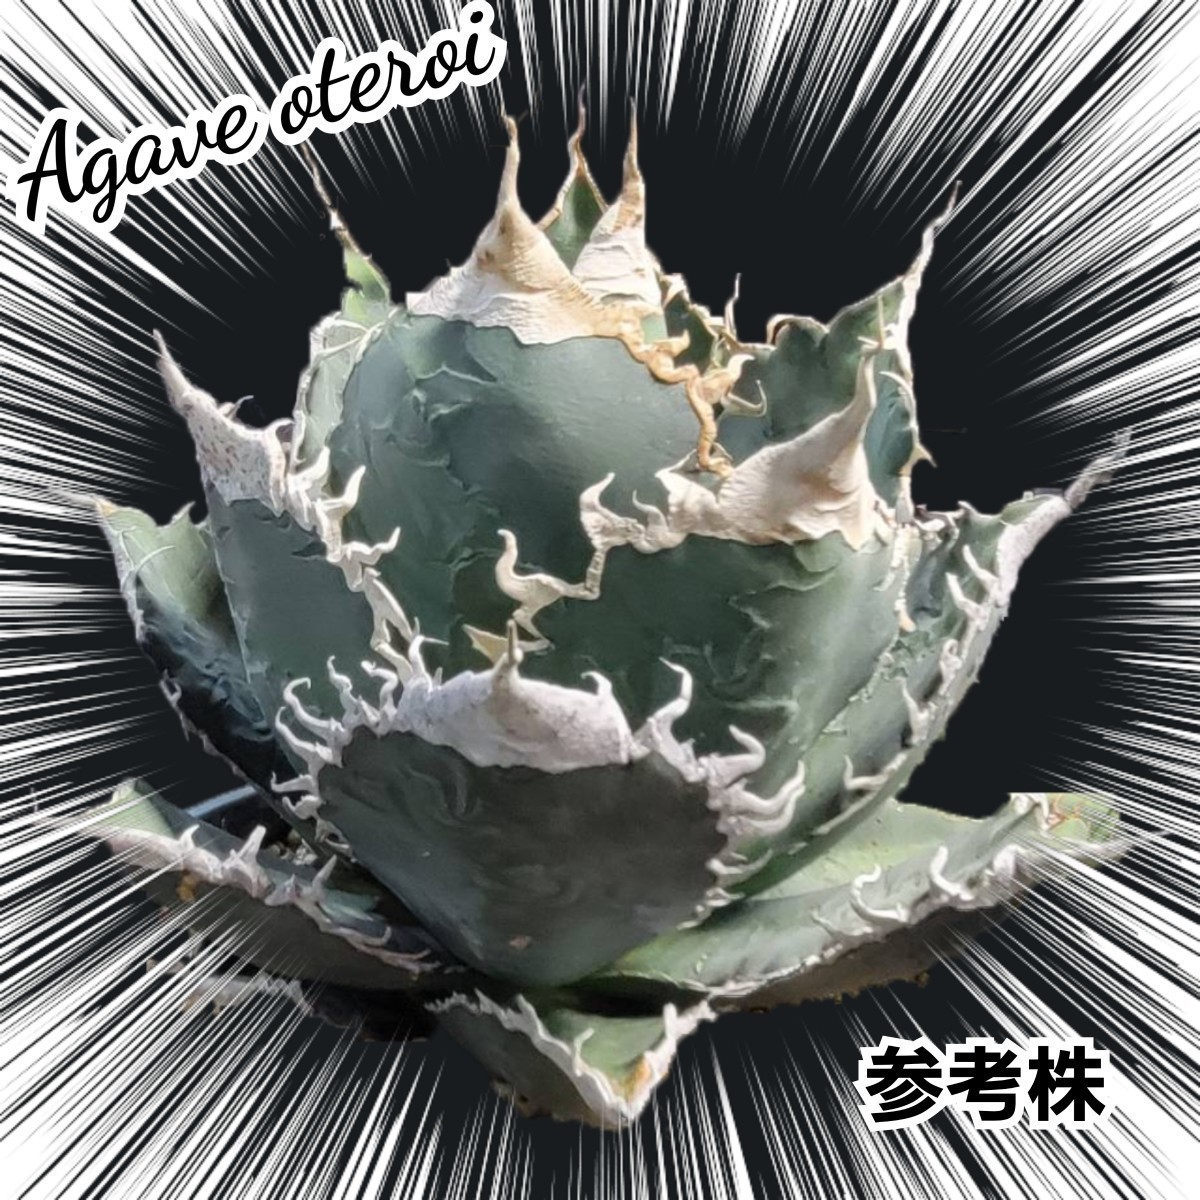 Agave oteroiseed　from Oaxaca Mexico　種子【10粒】良血統厳選　　鮮度の良い種ですので発芽率も高い！是非、実生にチャレンジください！